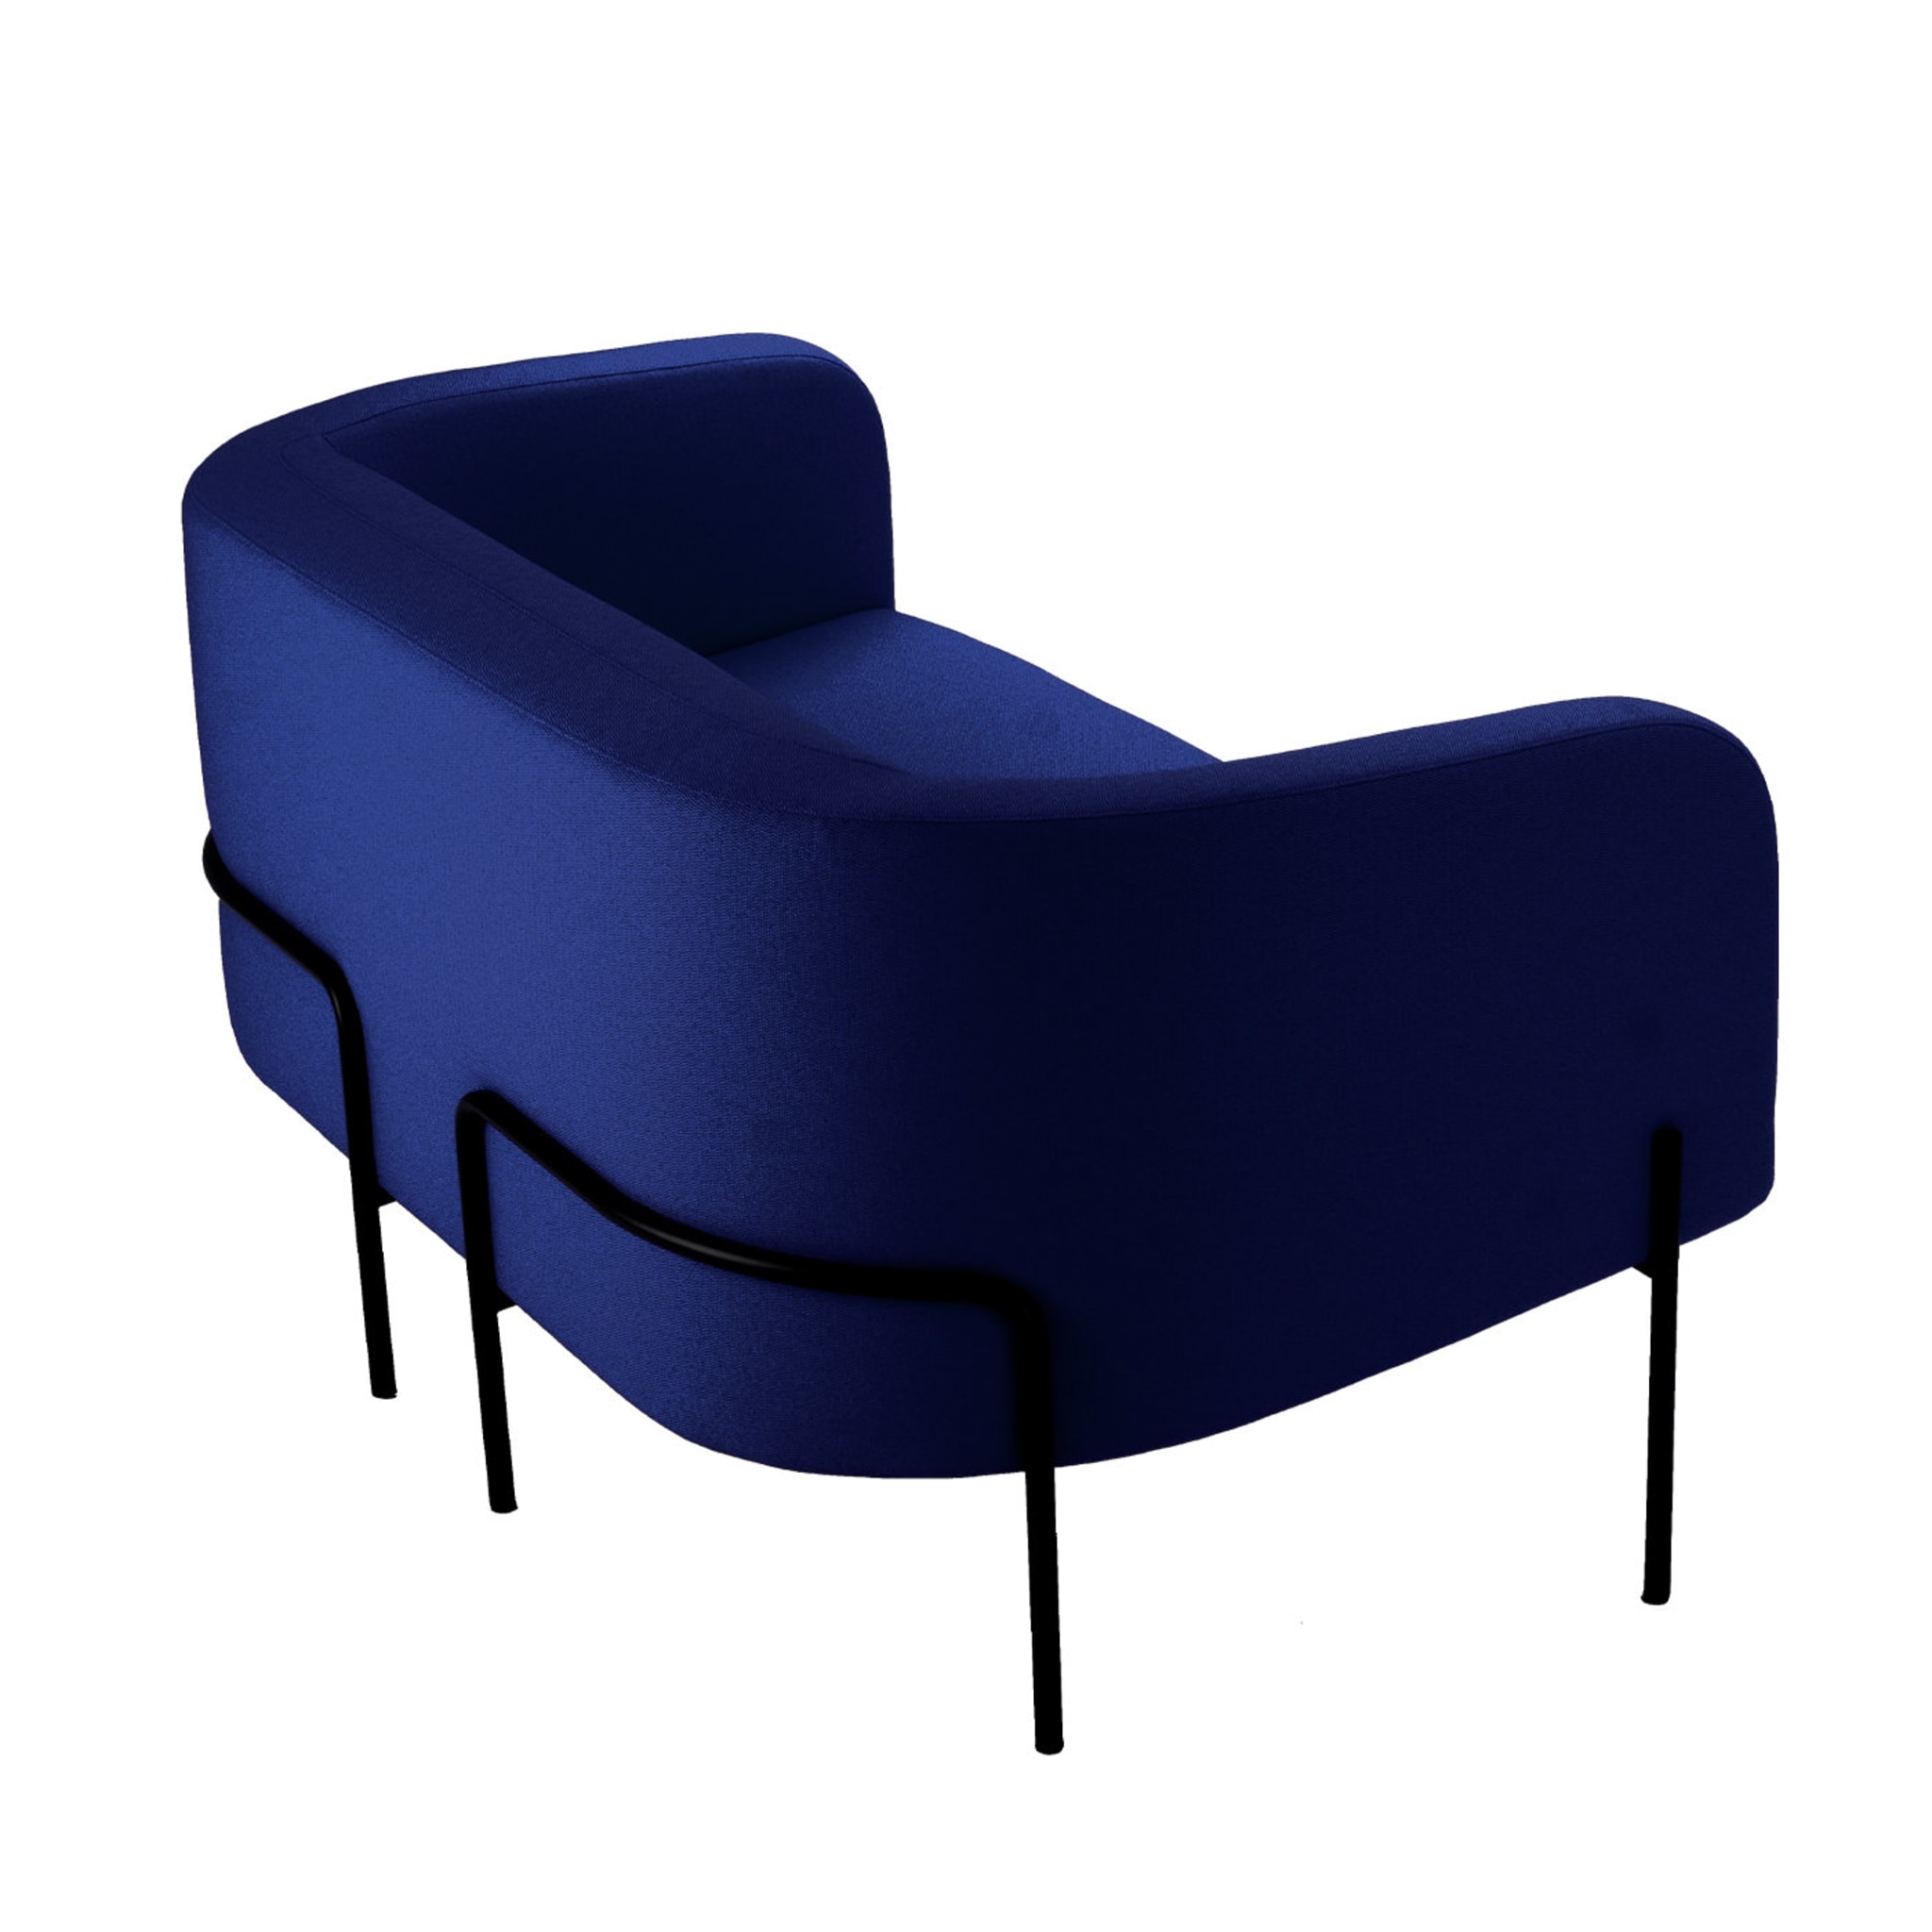 Laetitia Blue 2-Seater Sofa by Fabio Fantolino - Alternative view 2